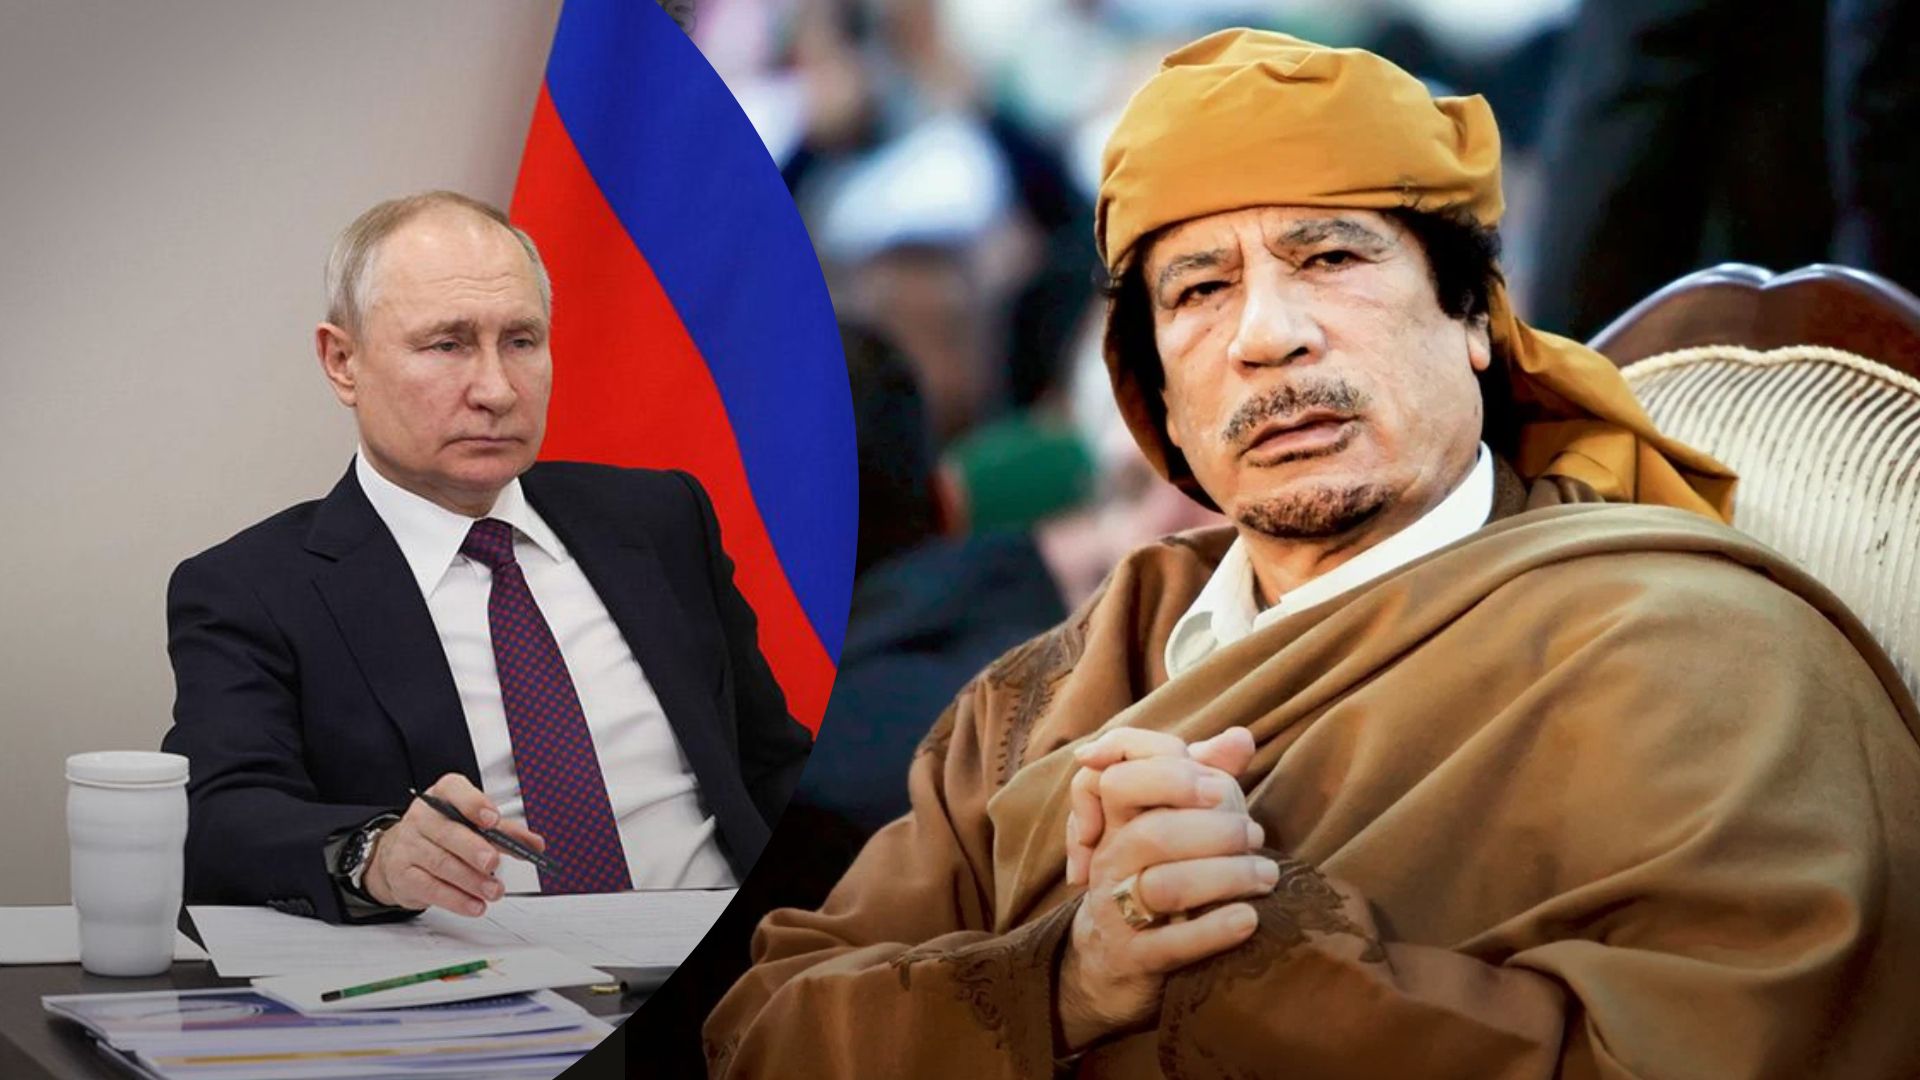 Гаага суд Путин - параллели с Ливией и Каддафи, что ожидает президента России - 24 Канал